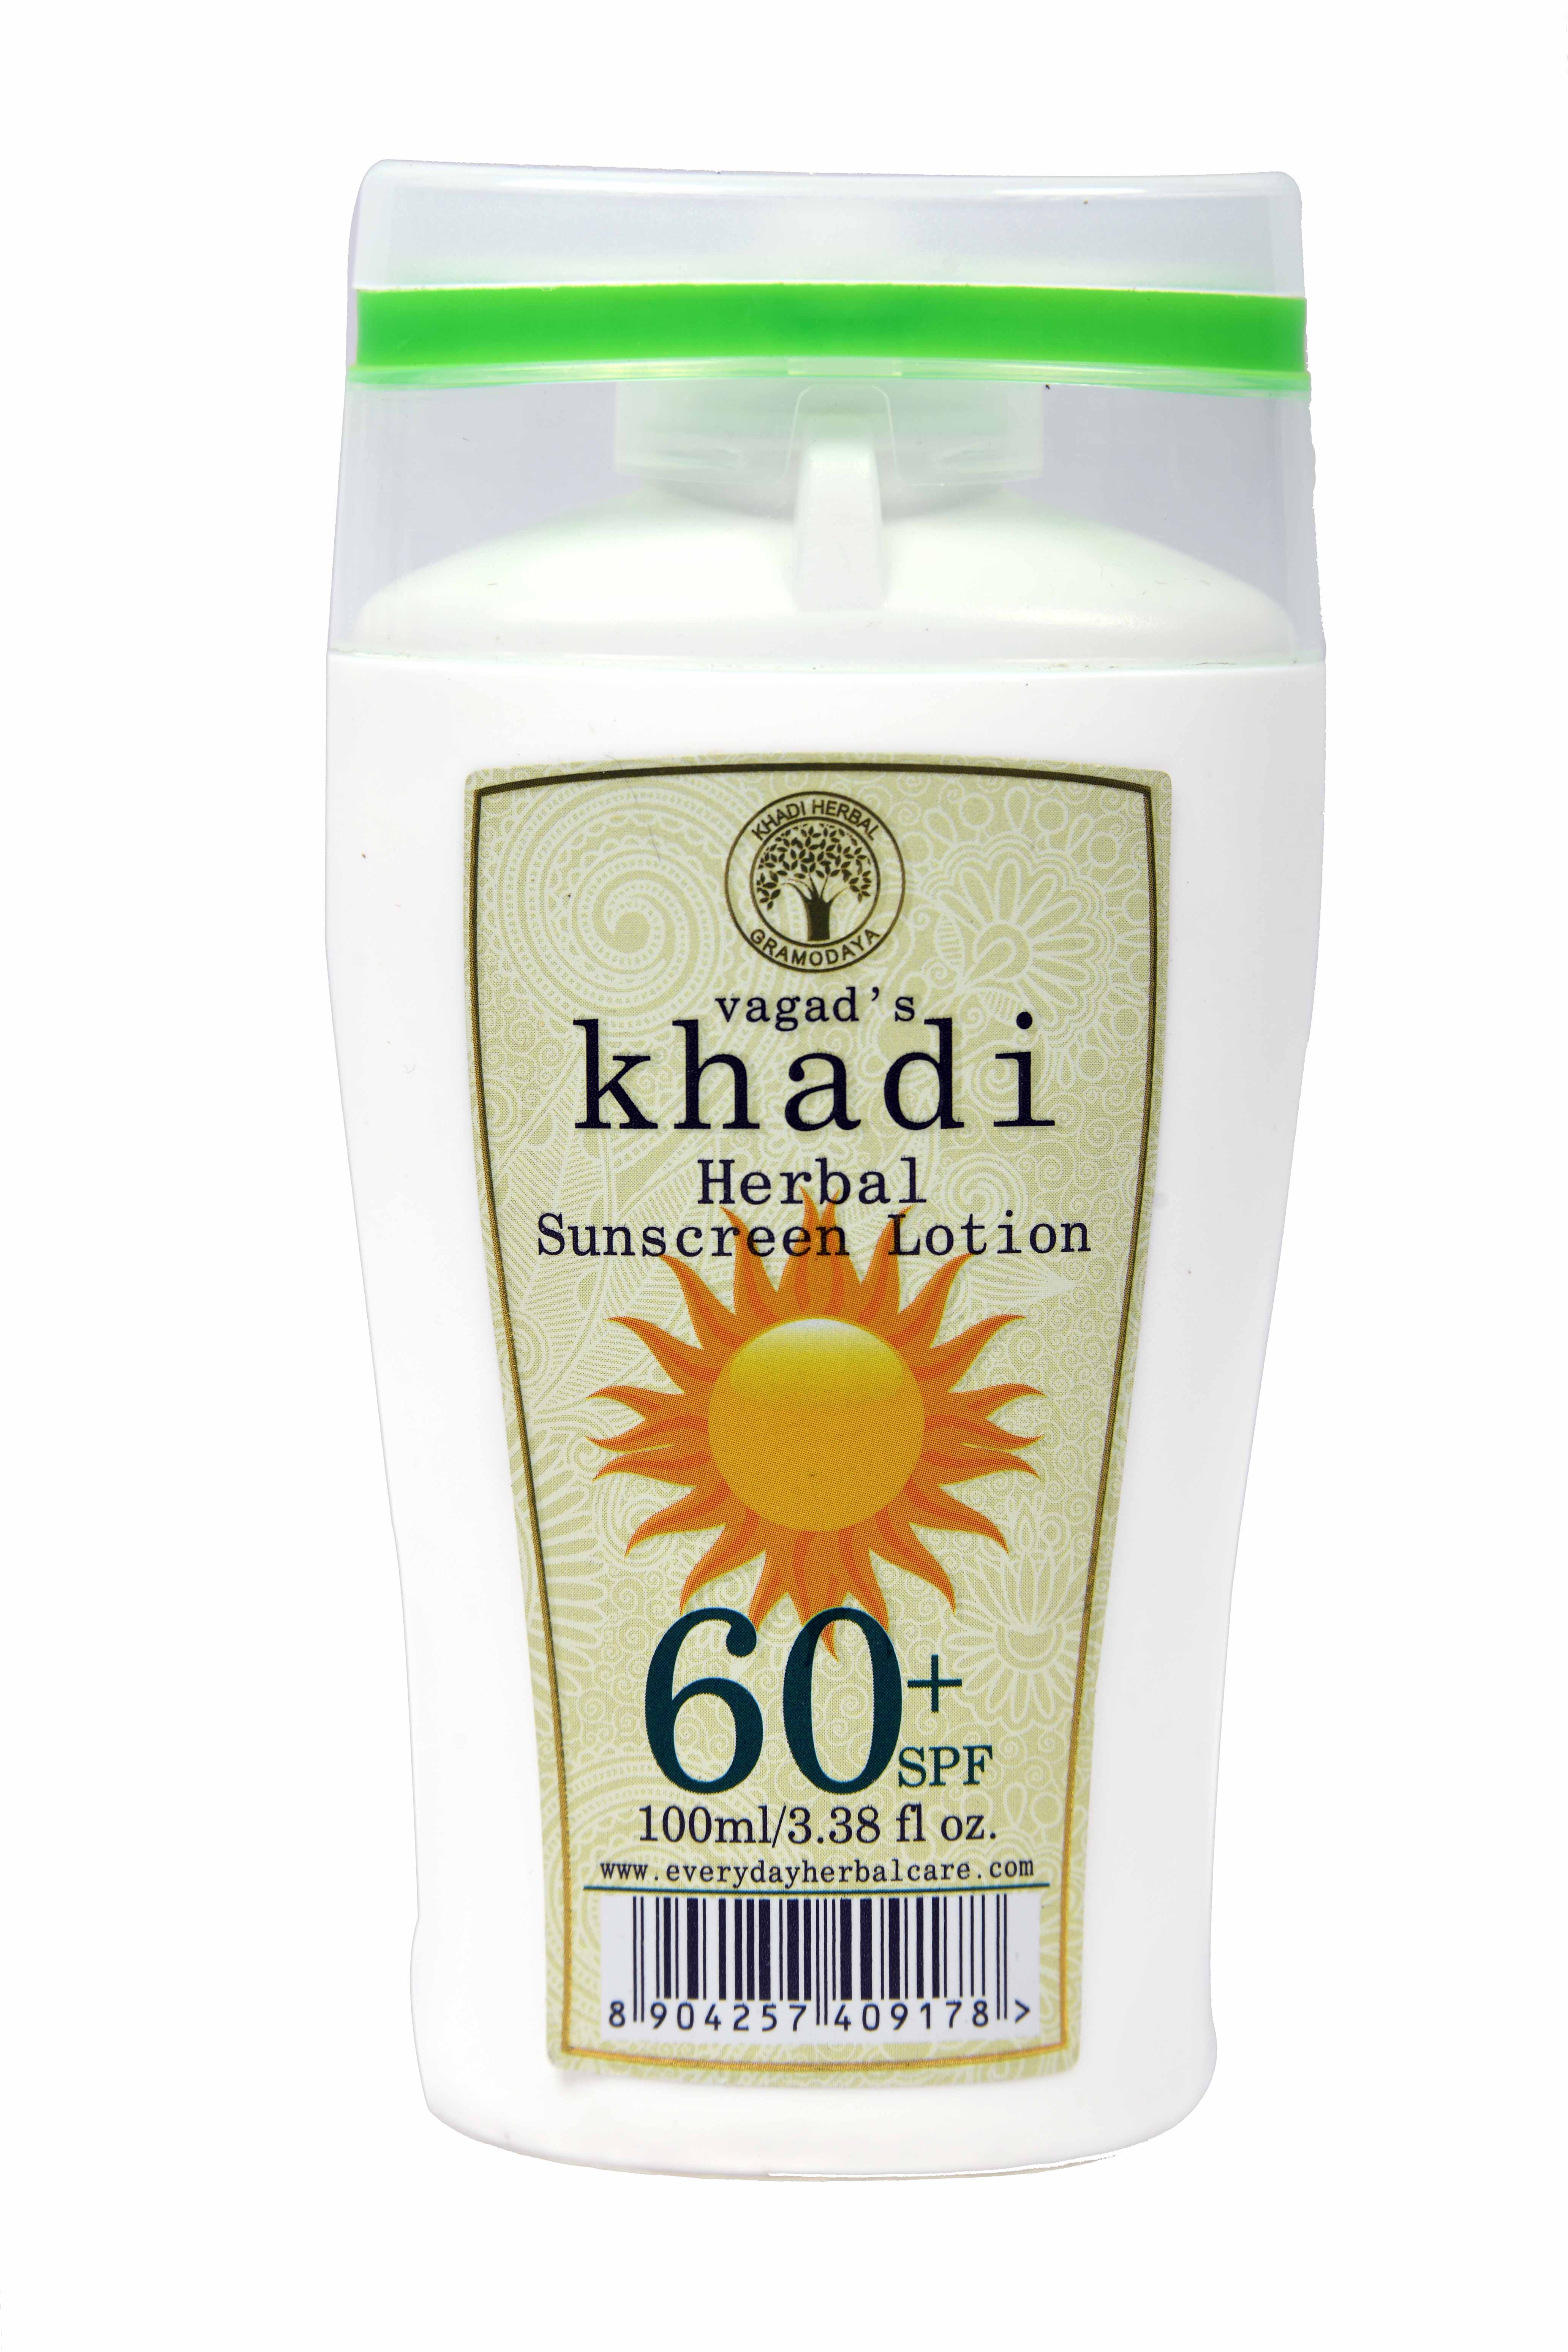 Buy Vagad's Khadi Spf 60 Sunscreen Lotion at Best Price Online